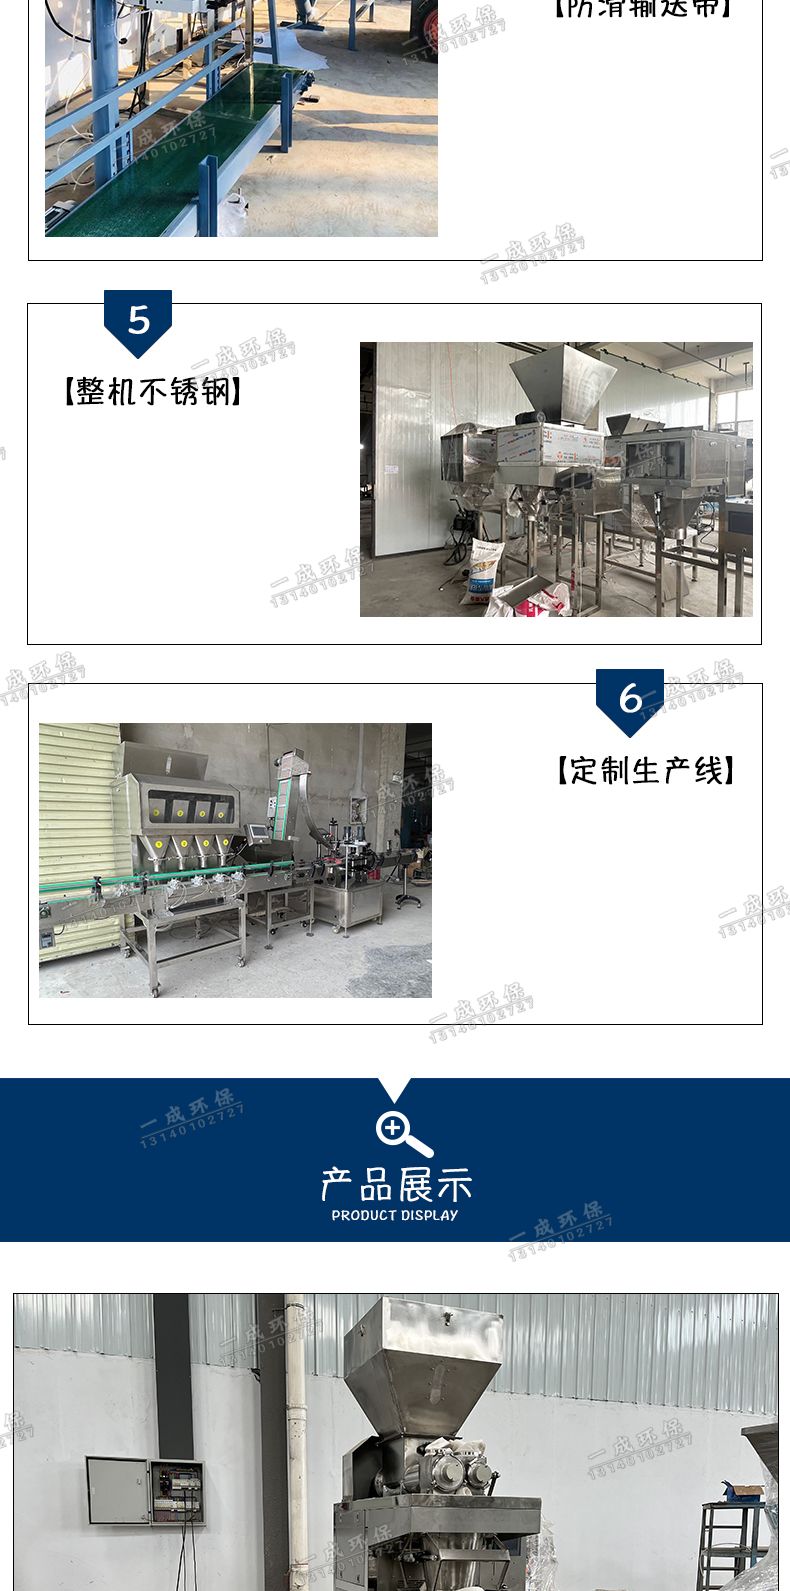 Small powder quantitative packaging machine Core flow start sorting machine Seasoning filling machine